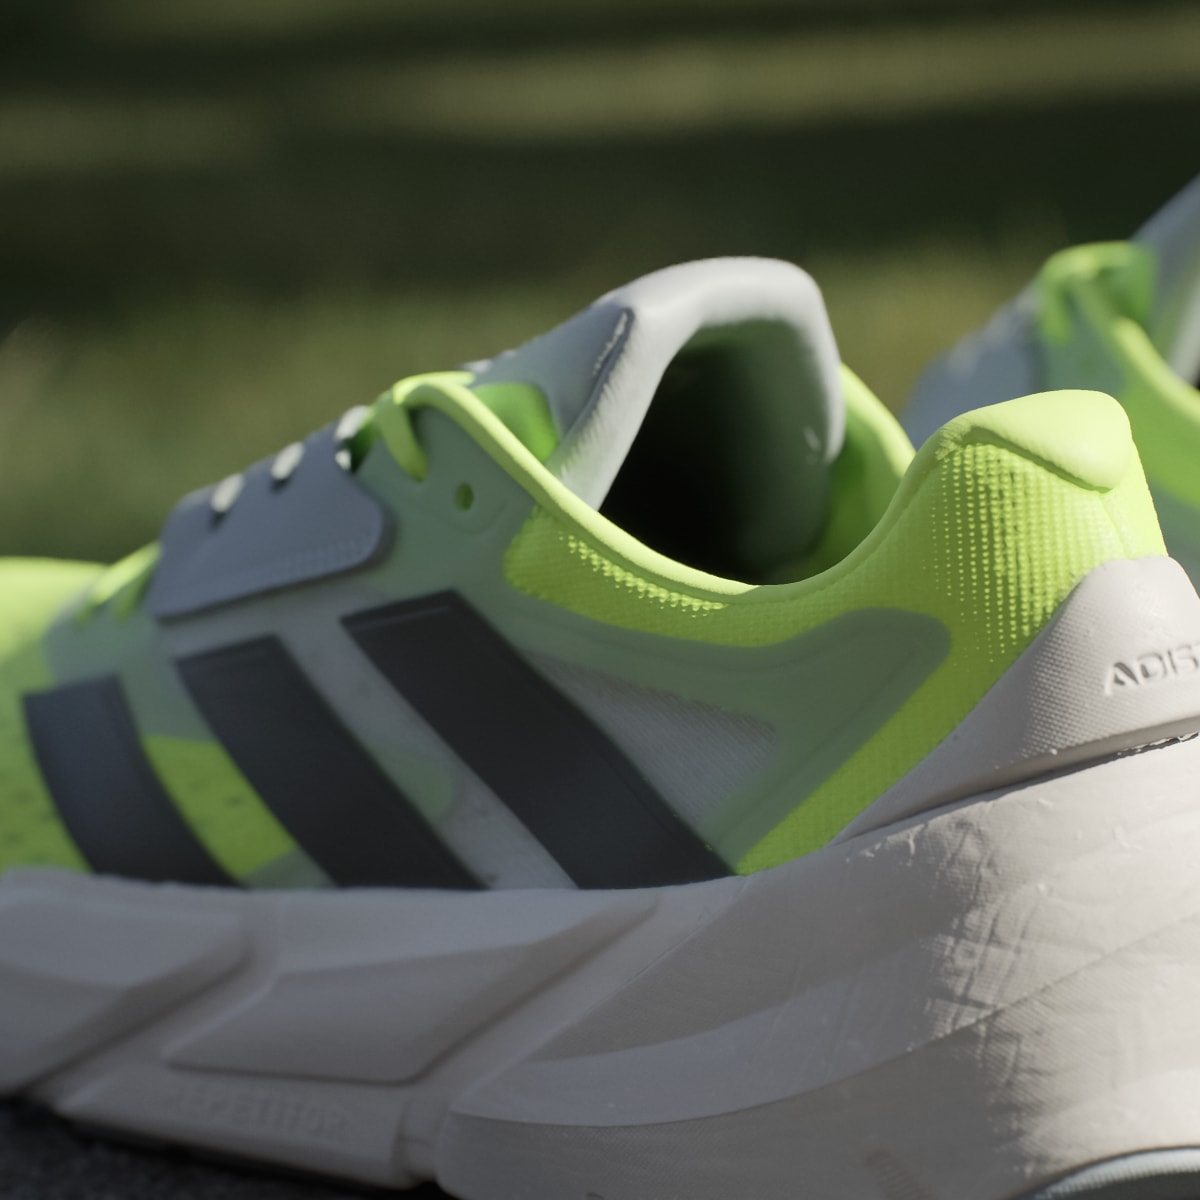 Adidas Scarpe adistar 2.0. 8